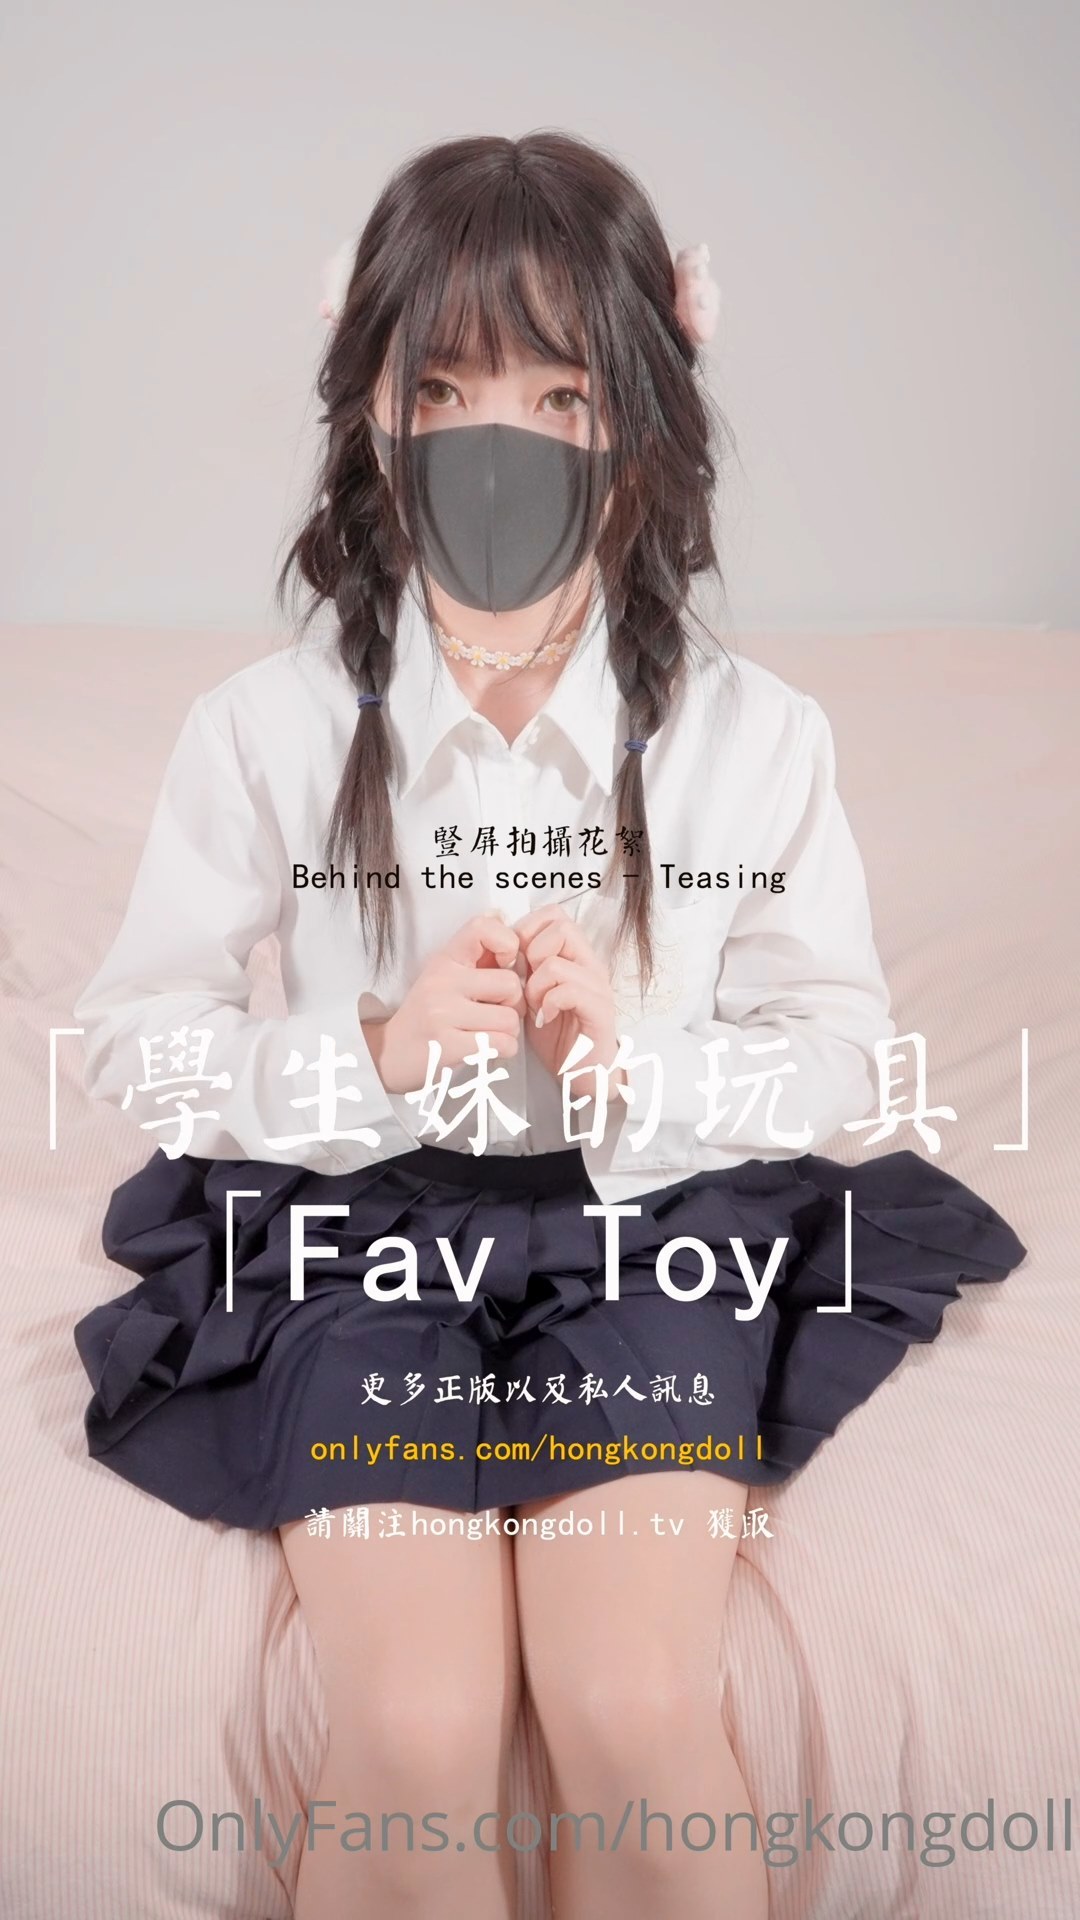 [OnlyFans.com] Fav Toy (Hong Kong Doll) [uncen] - 554.3 MB